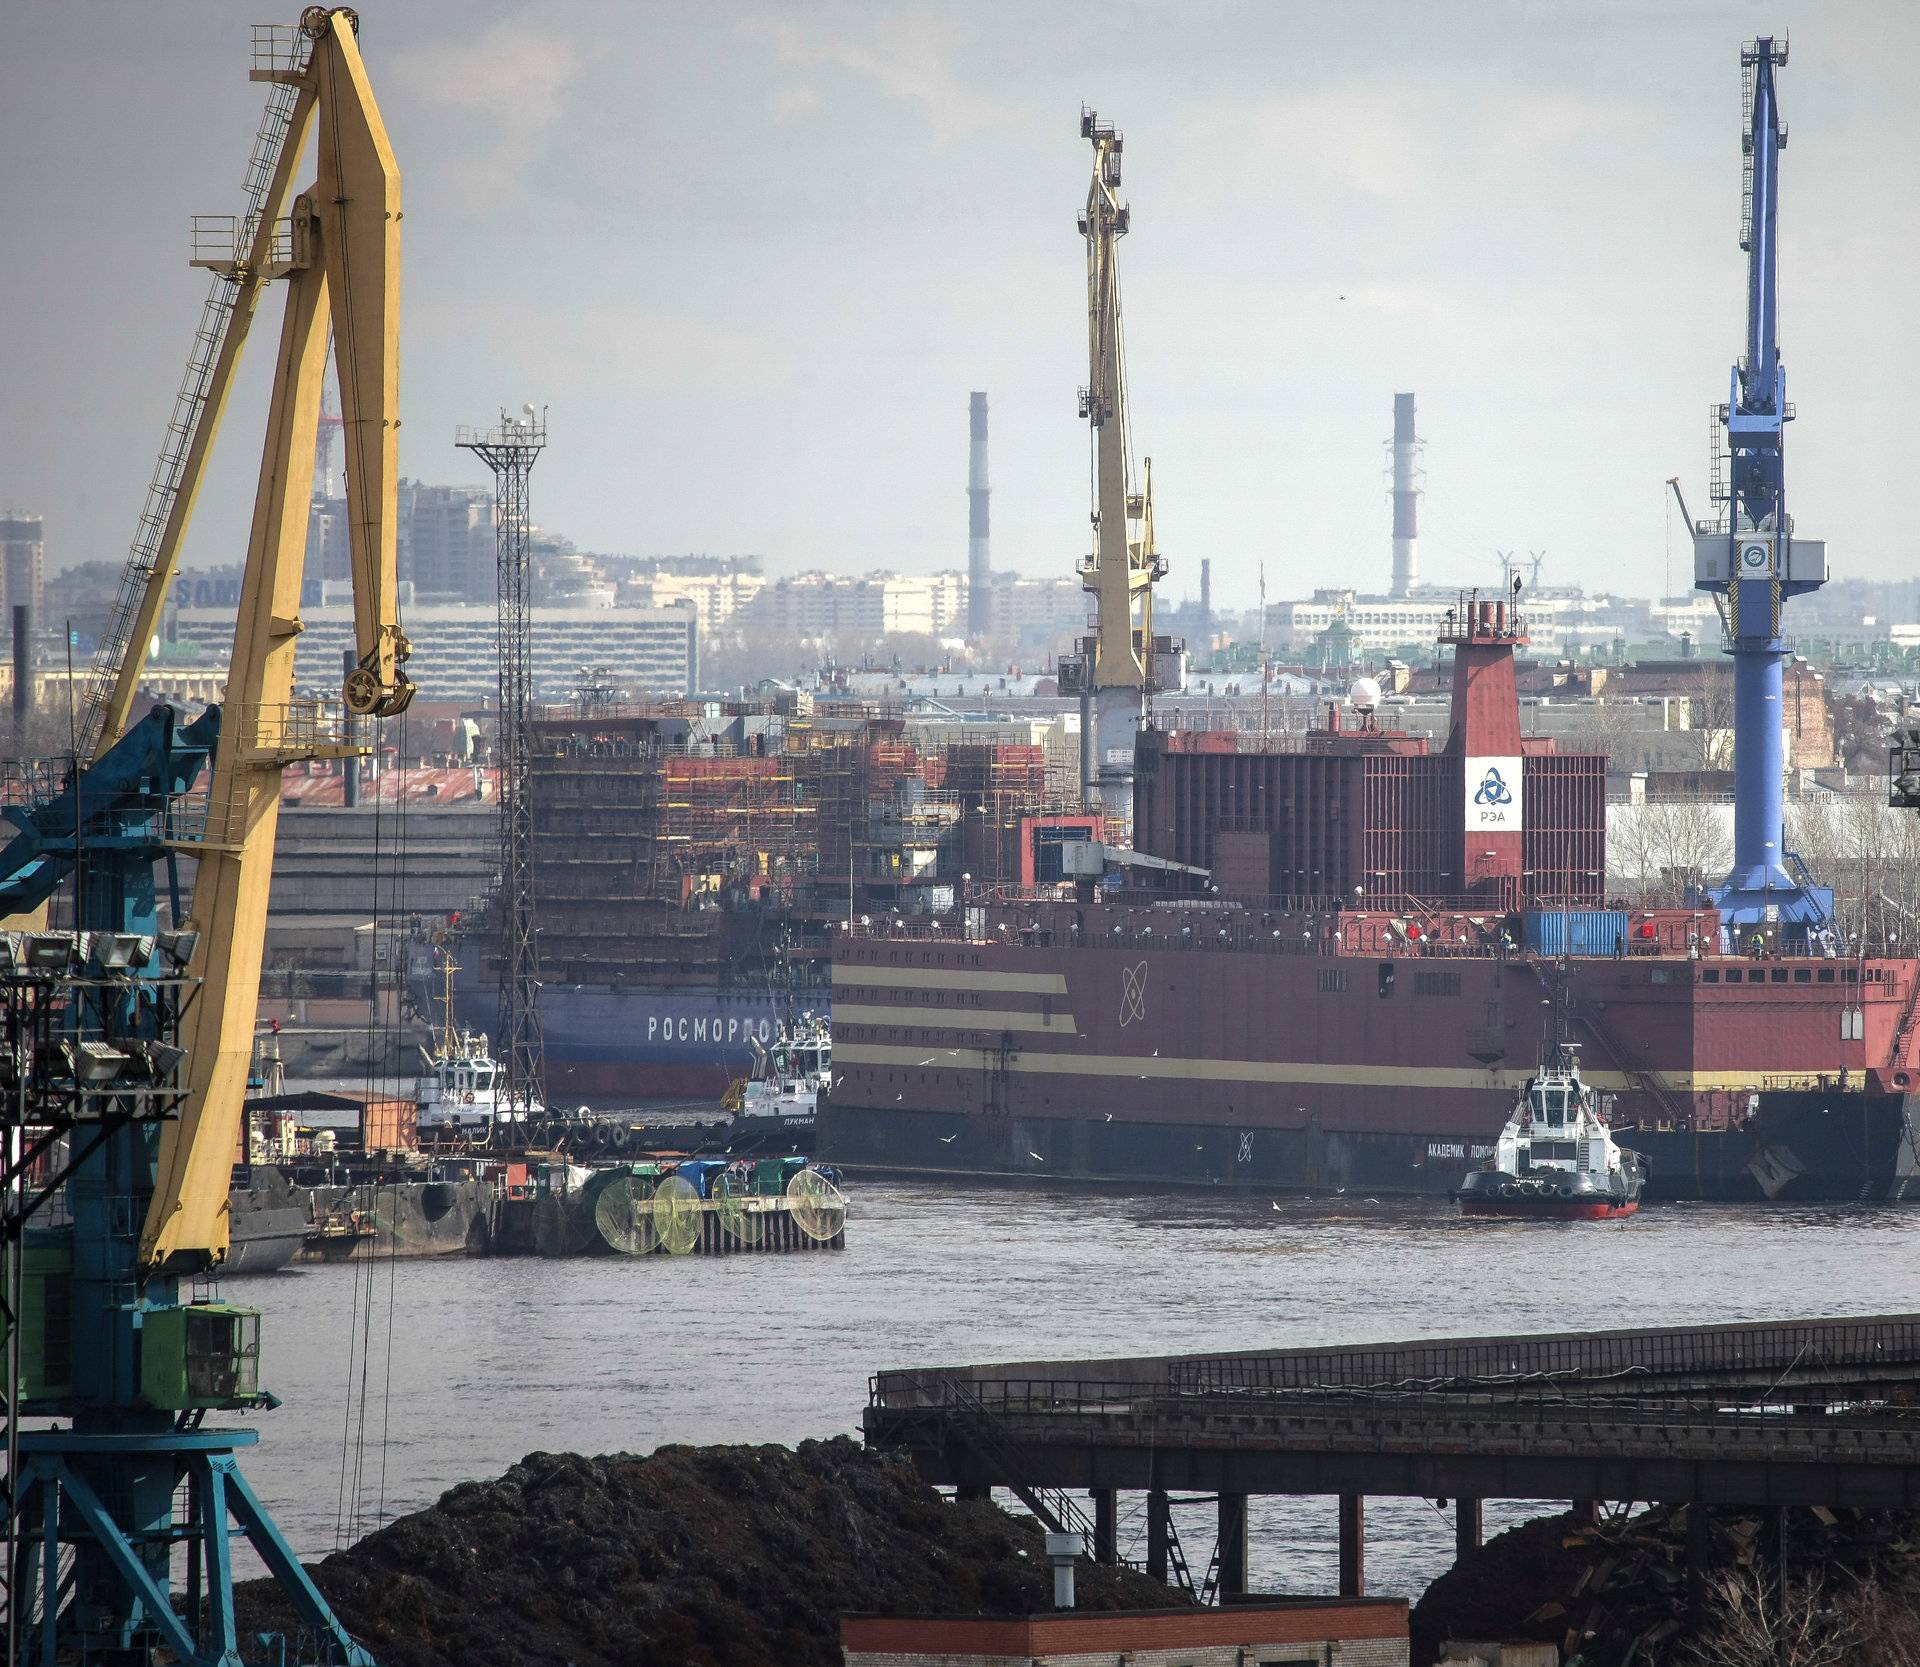 The "Akademik Lomonosov", the worldâs first floating nuclear power plant, leaves St. Petersburg under tow, towards Murmansk